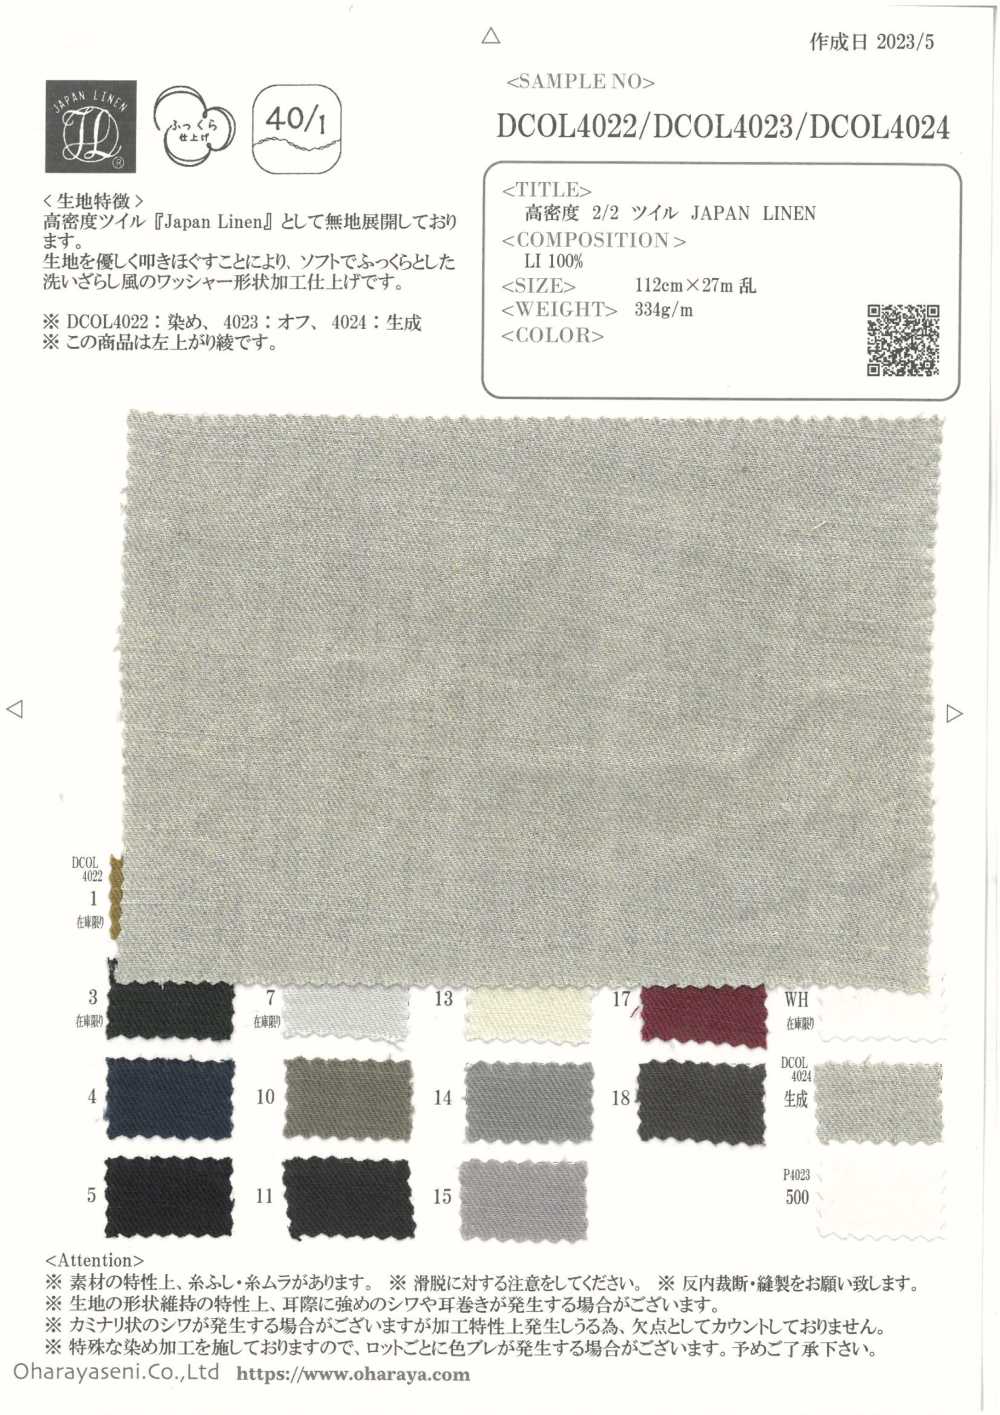 DCOL4022 Hochdichtes 2/2-Twill-JAPAN-LEINEN[Textilgewebe] Oharayaseni